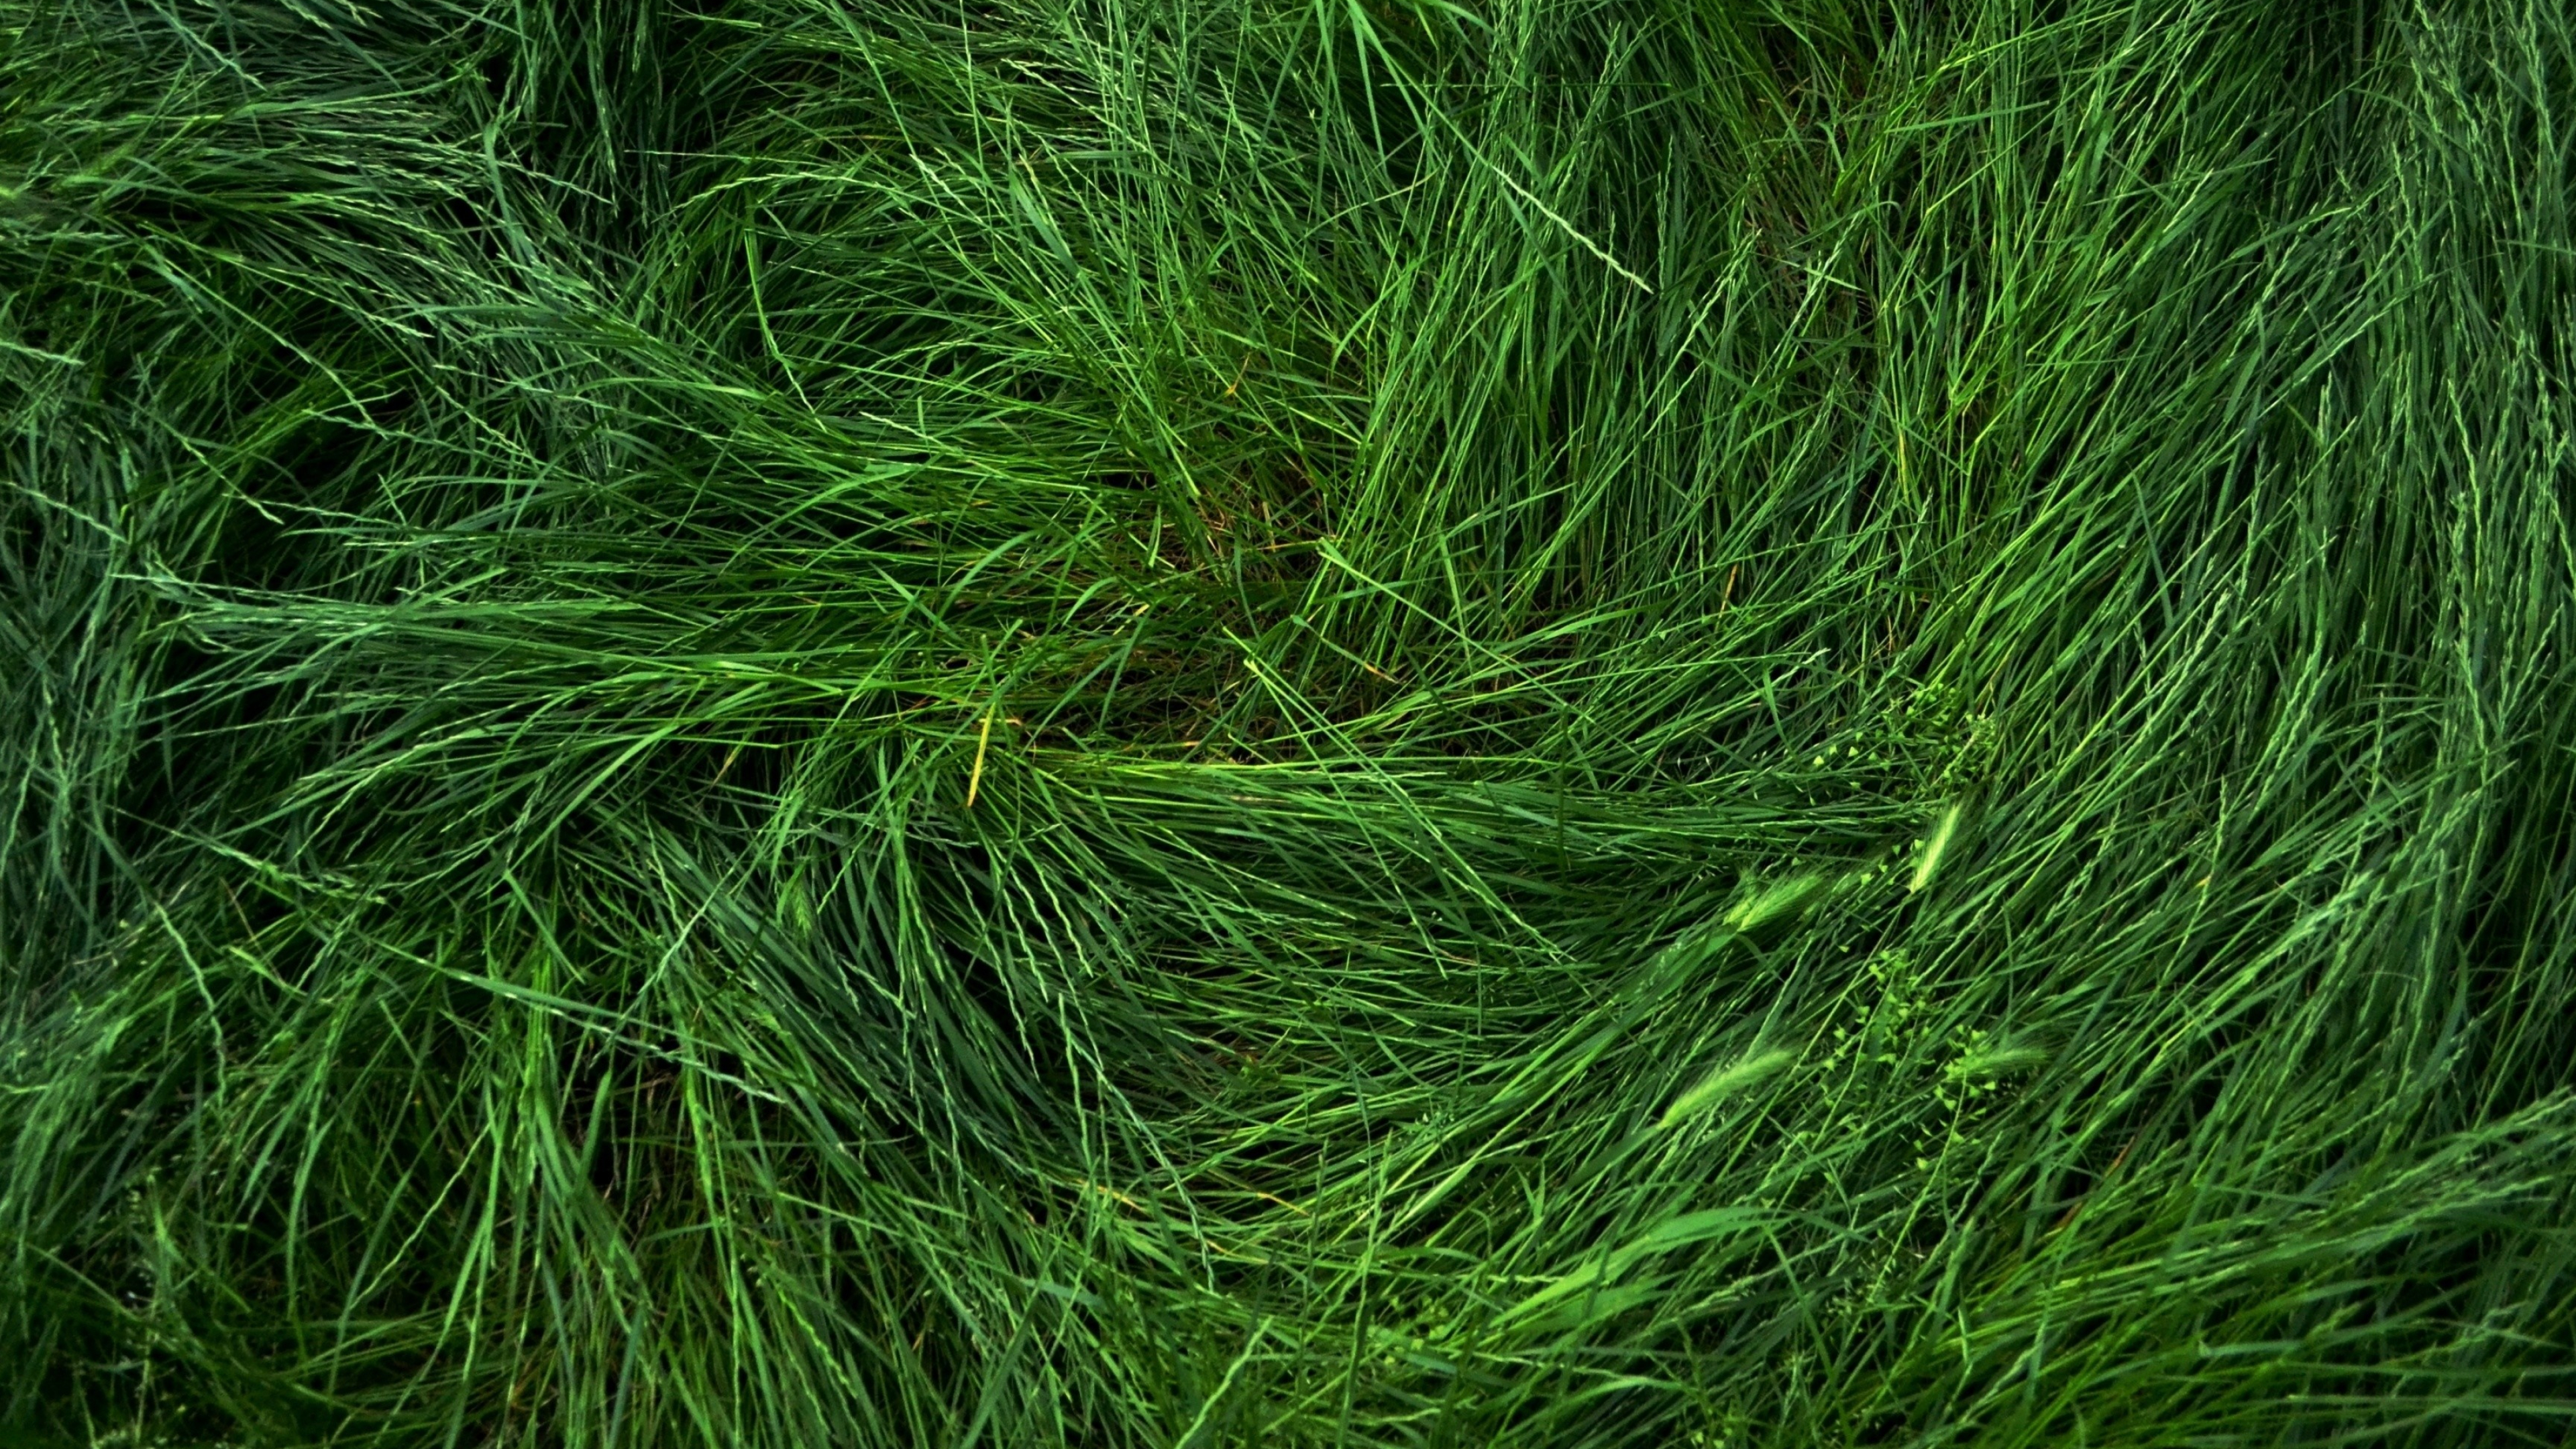 Grass wallpapers, Background pictures, Nature's allure, Captivating scenes, 3840x2160 4K Desktop